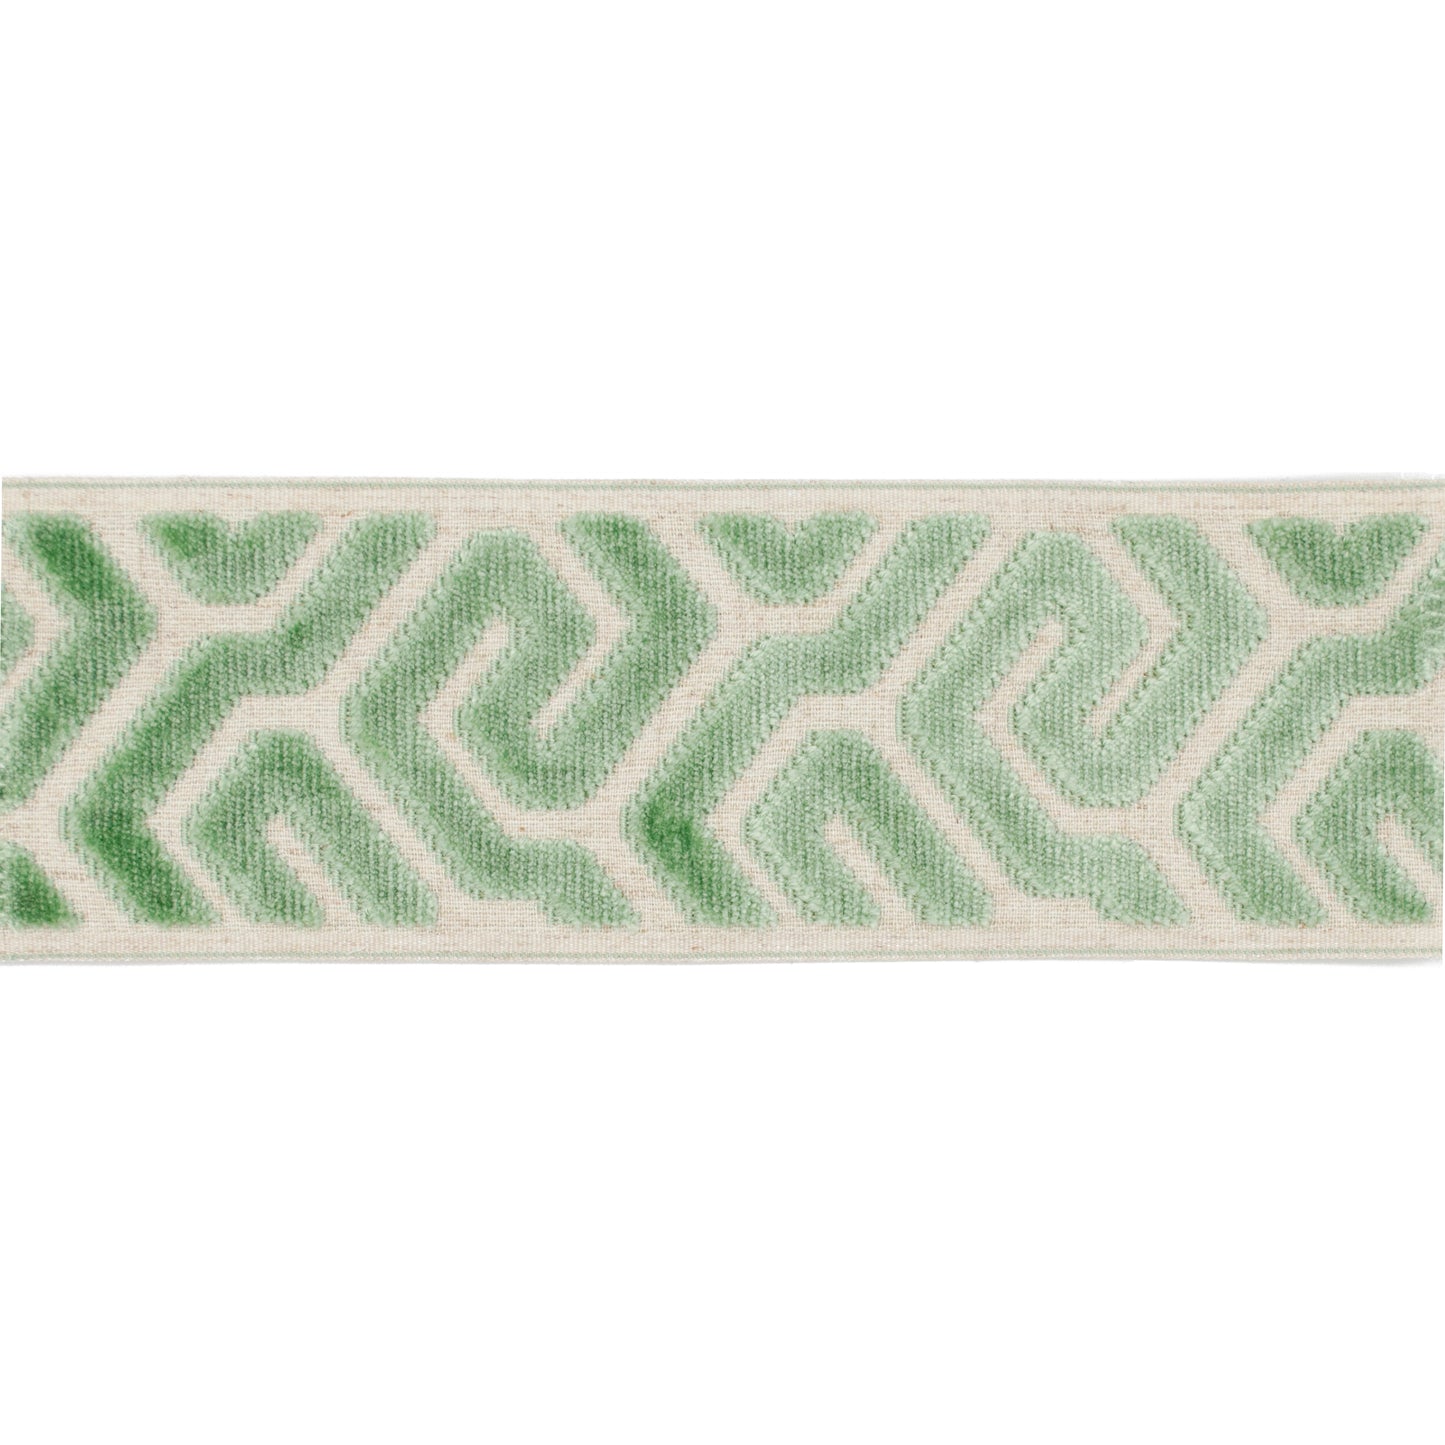 Purchase Mag FabricSKU 11179 pattern name Sutton Tape Caribbean Green